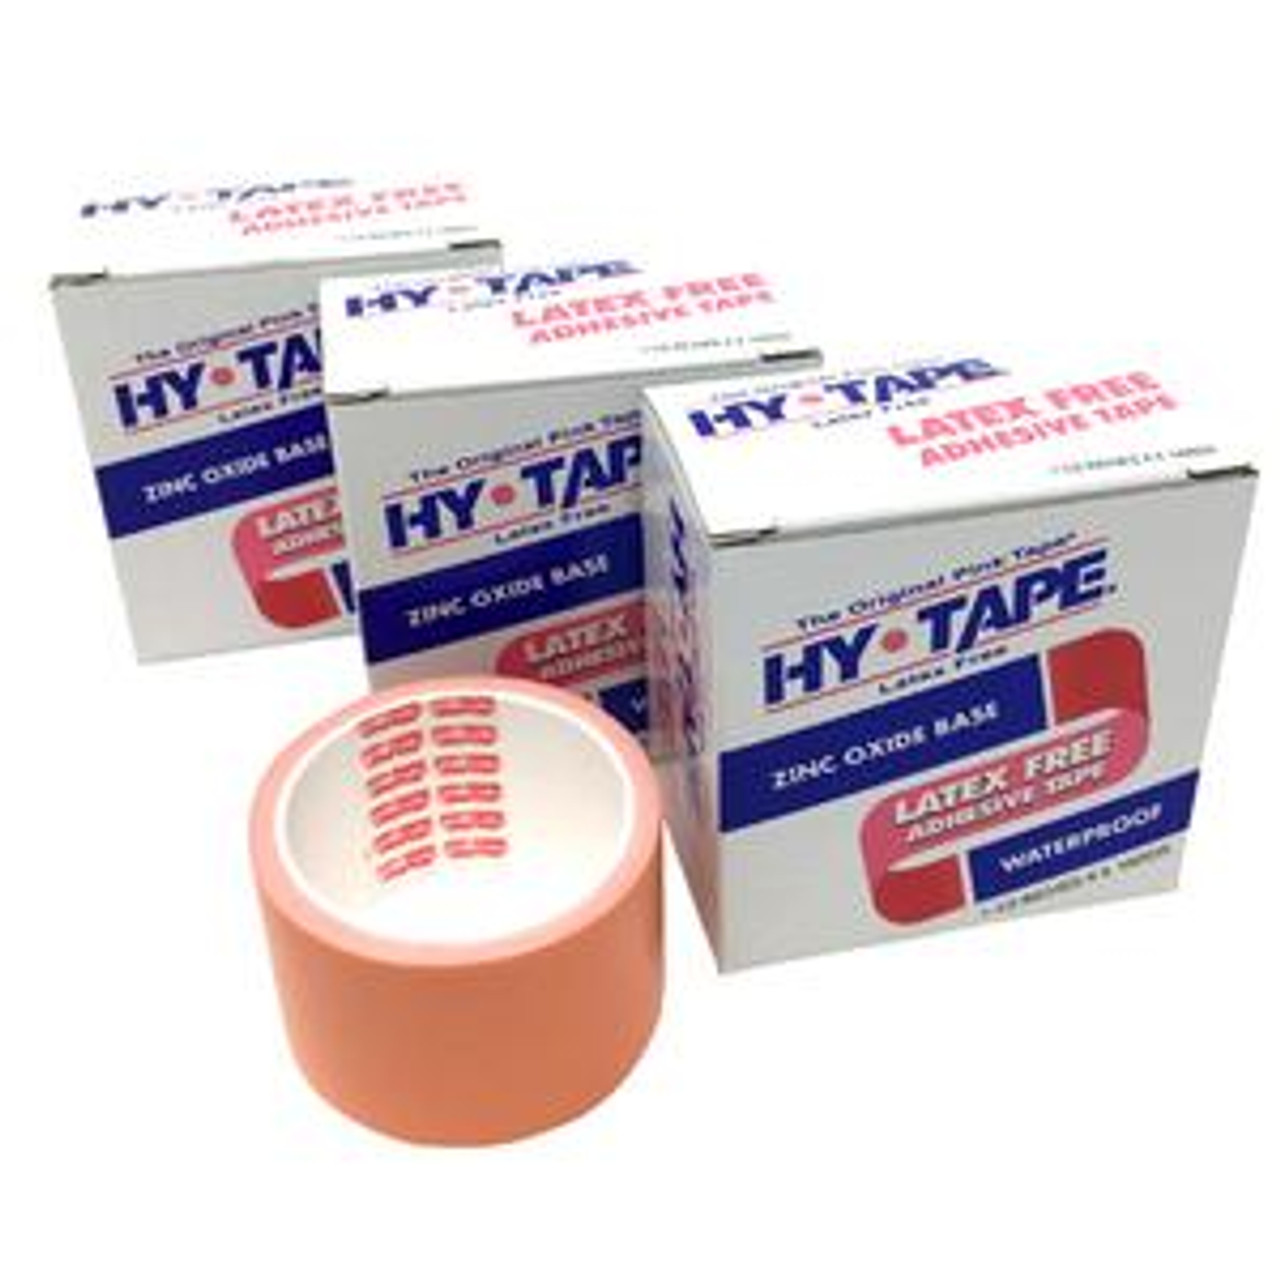 Hy-Tape Medical Tape, Waterproof Zinc Oxide-Based Adhesive